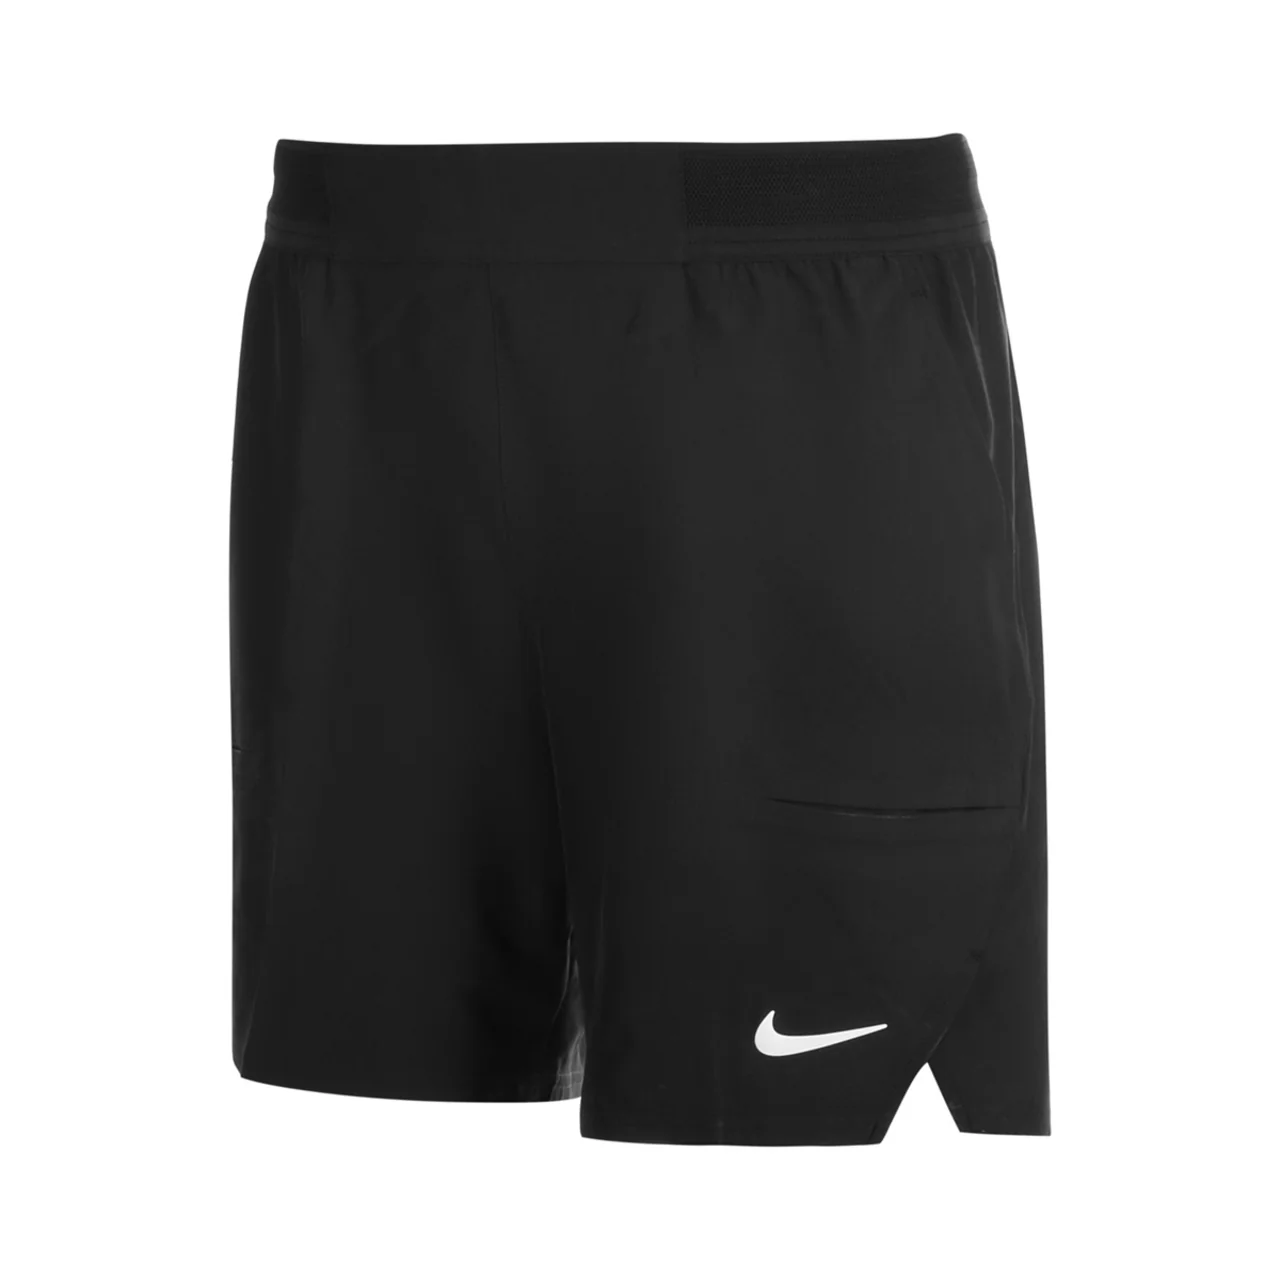 Nike Dri-FIT Advantage 7'' Shorts Black/White Size S